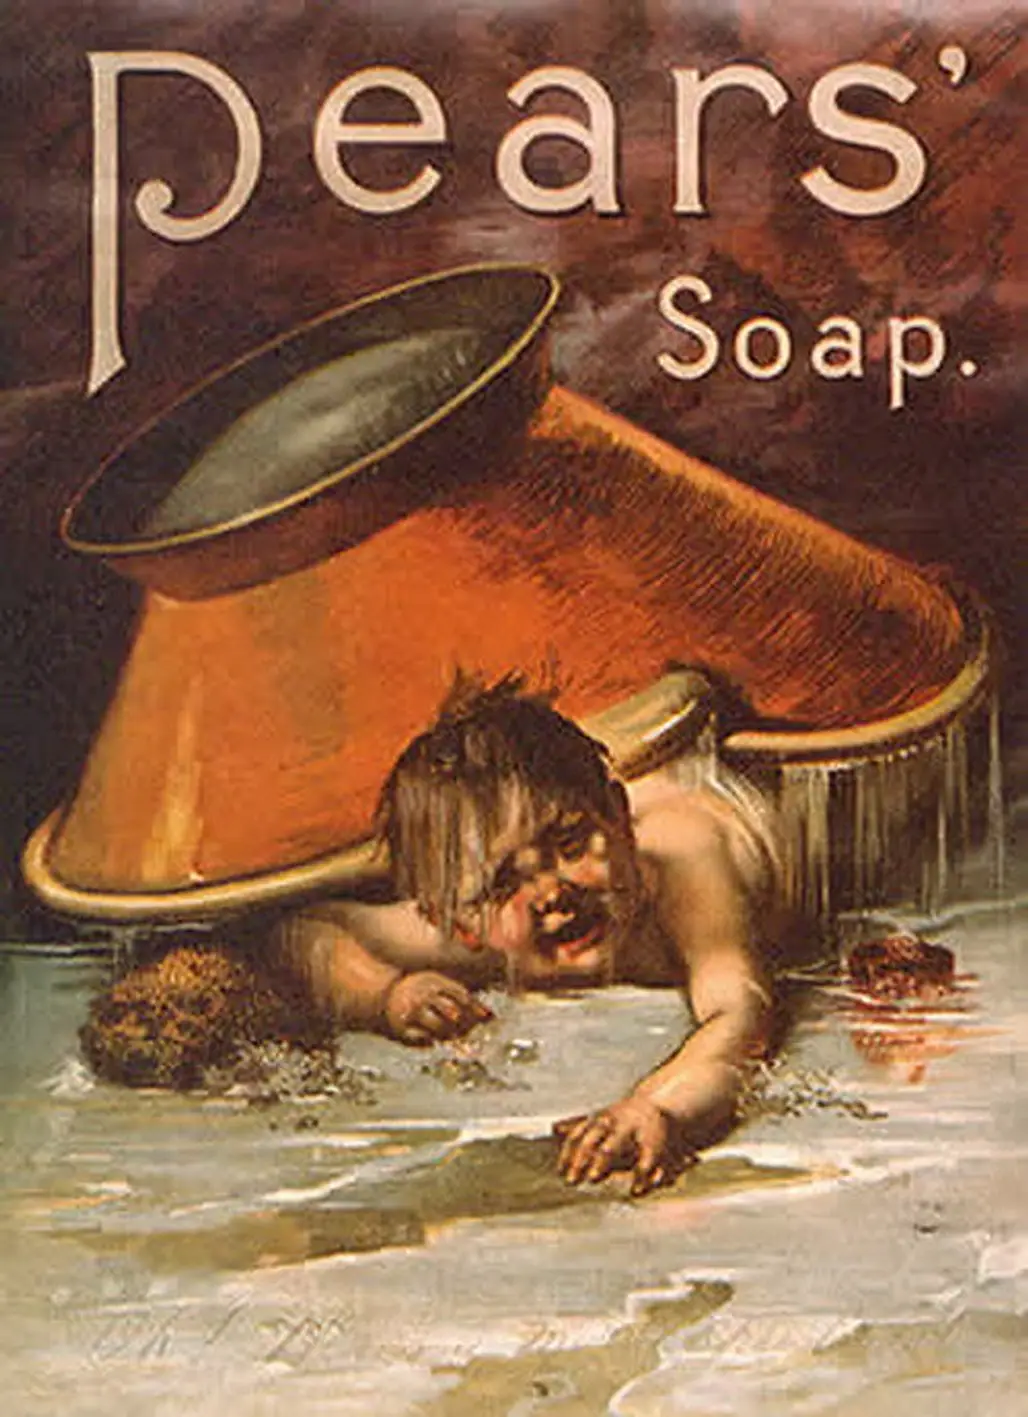 Evil Pears' Soap